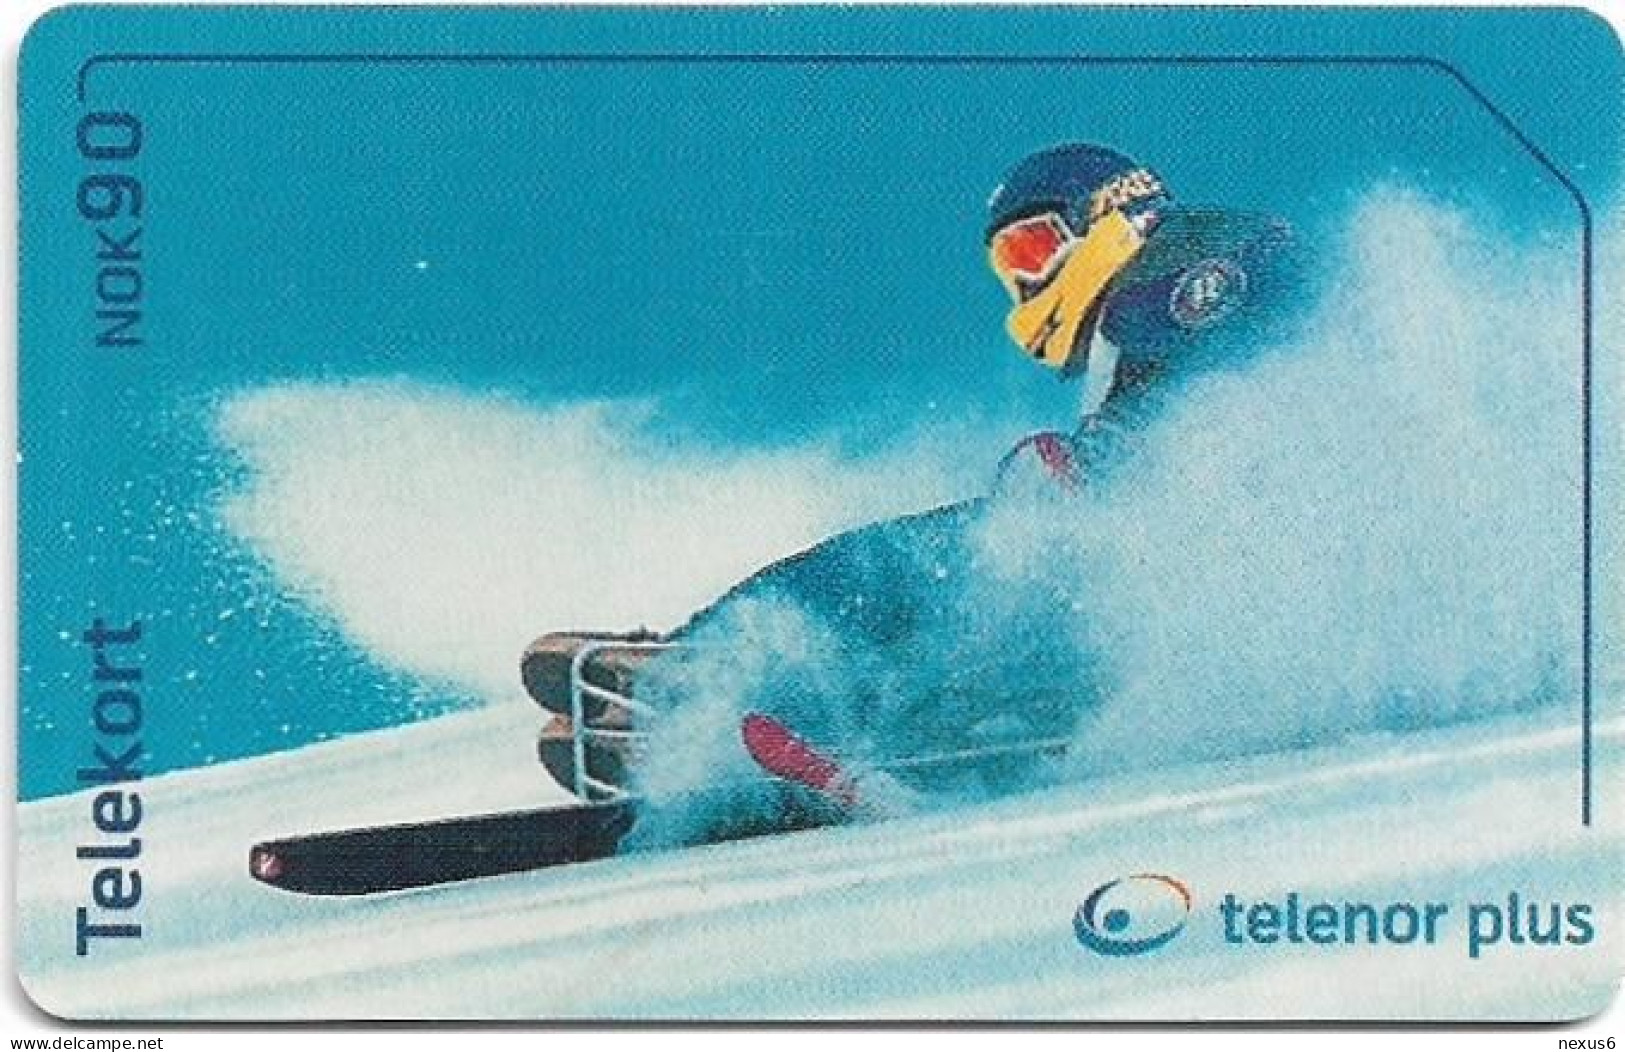 Norway - Telenor - Alpint Snow Ski - N-238 (Cn. 23030 001D6), SC7, 03.2002, 20.000ex, Used - Noruega